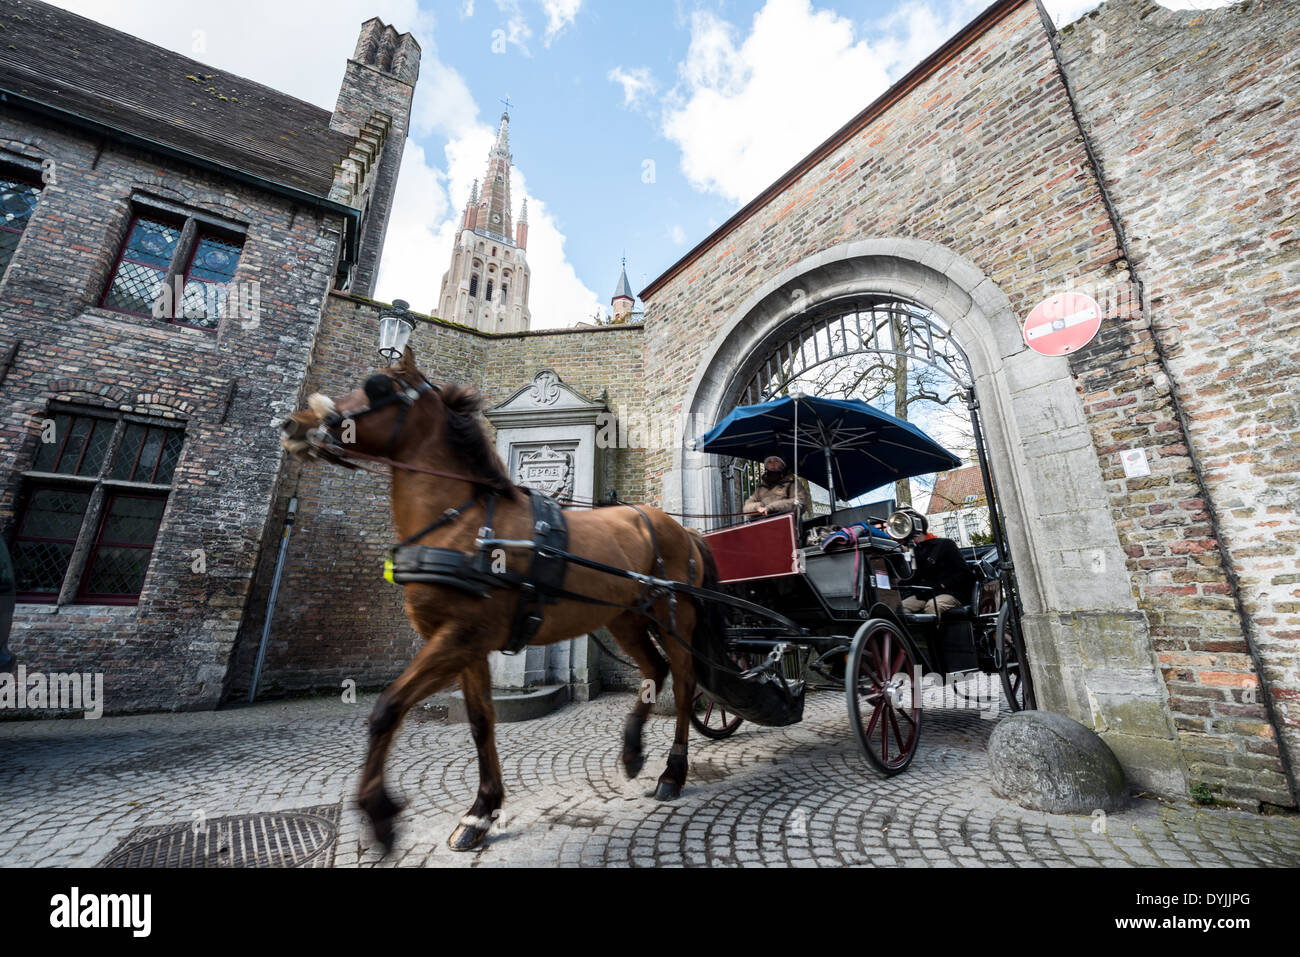 Brujas, Bélgica - Turistas tour por las calles adoquinadas del centro histórico de Brujas, en un carruaje tirado por caballos. Foto de stock